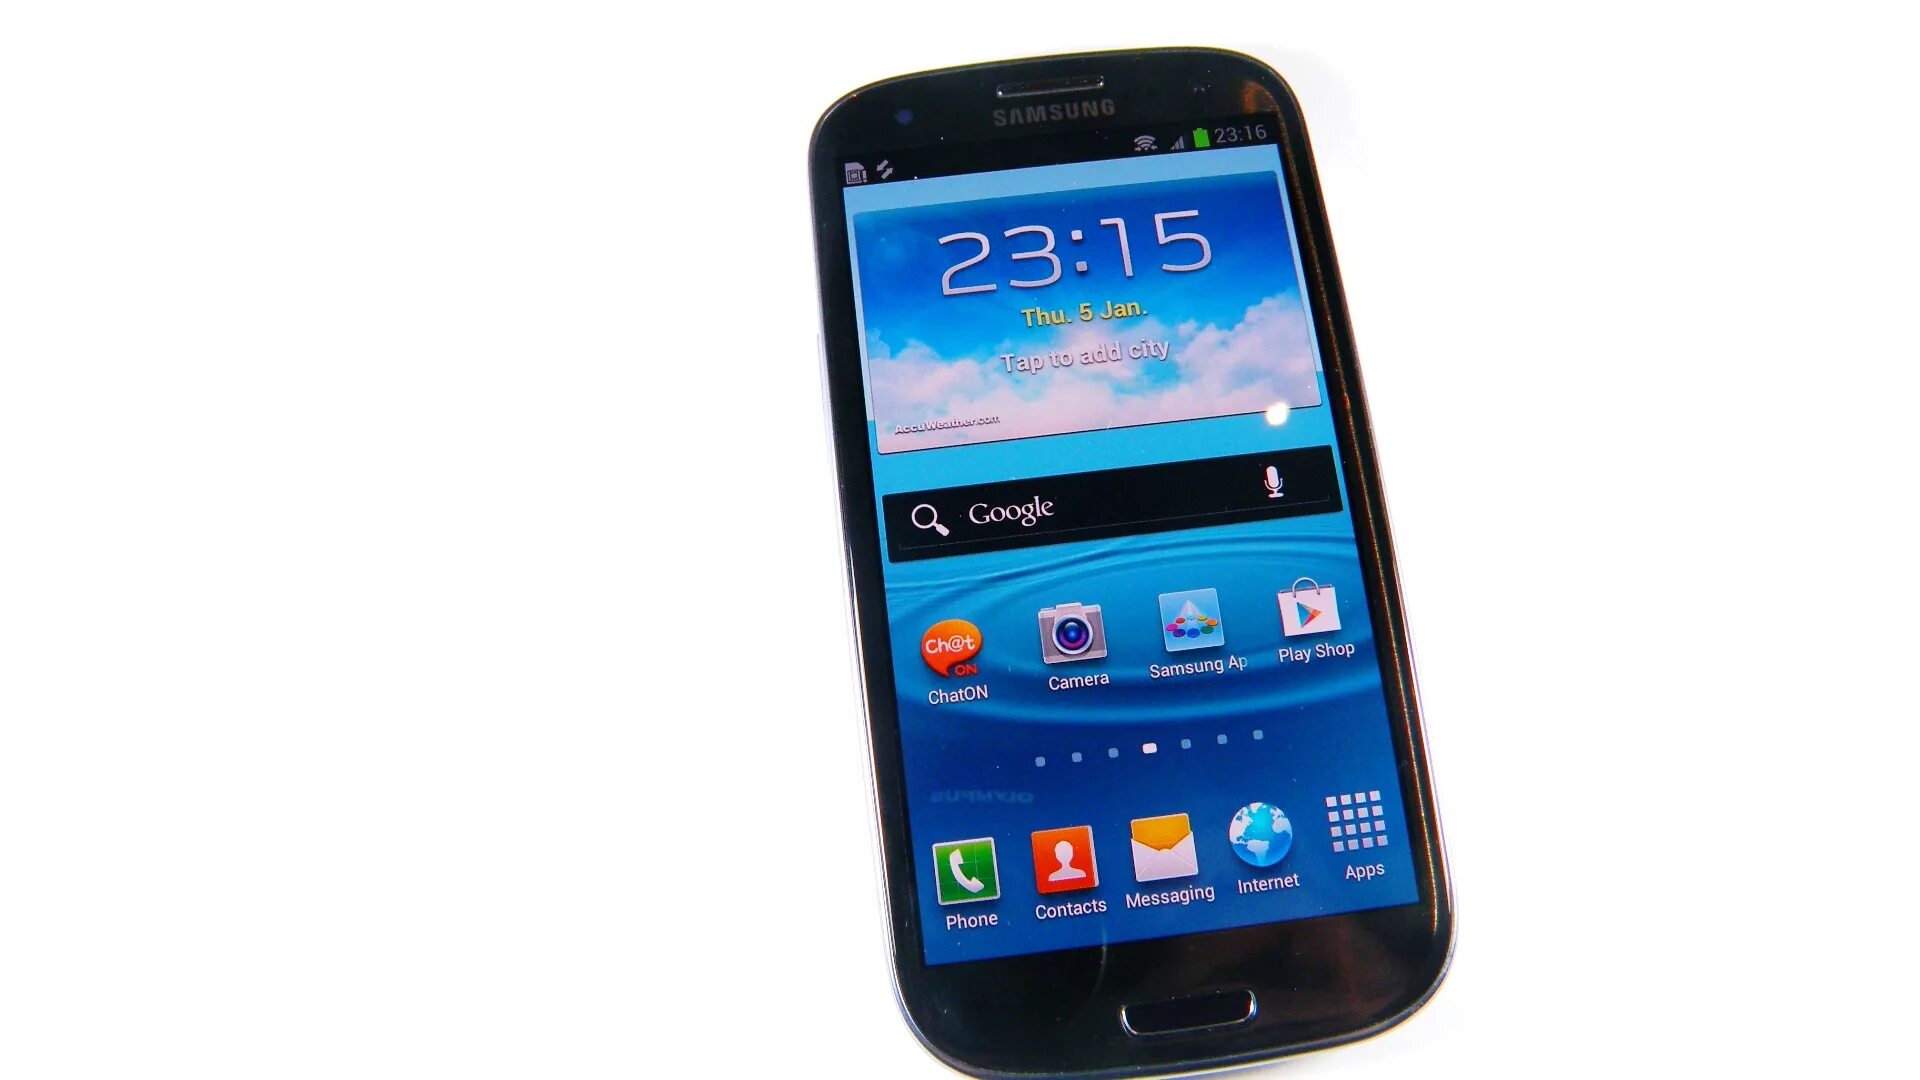 Samsung Galaxy s3. Samsung Galaxy s 3 плюс. Samsung Galaxy Neo 3. Самсунг галакси с 23. S 3.00